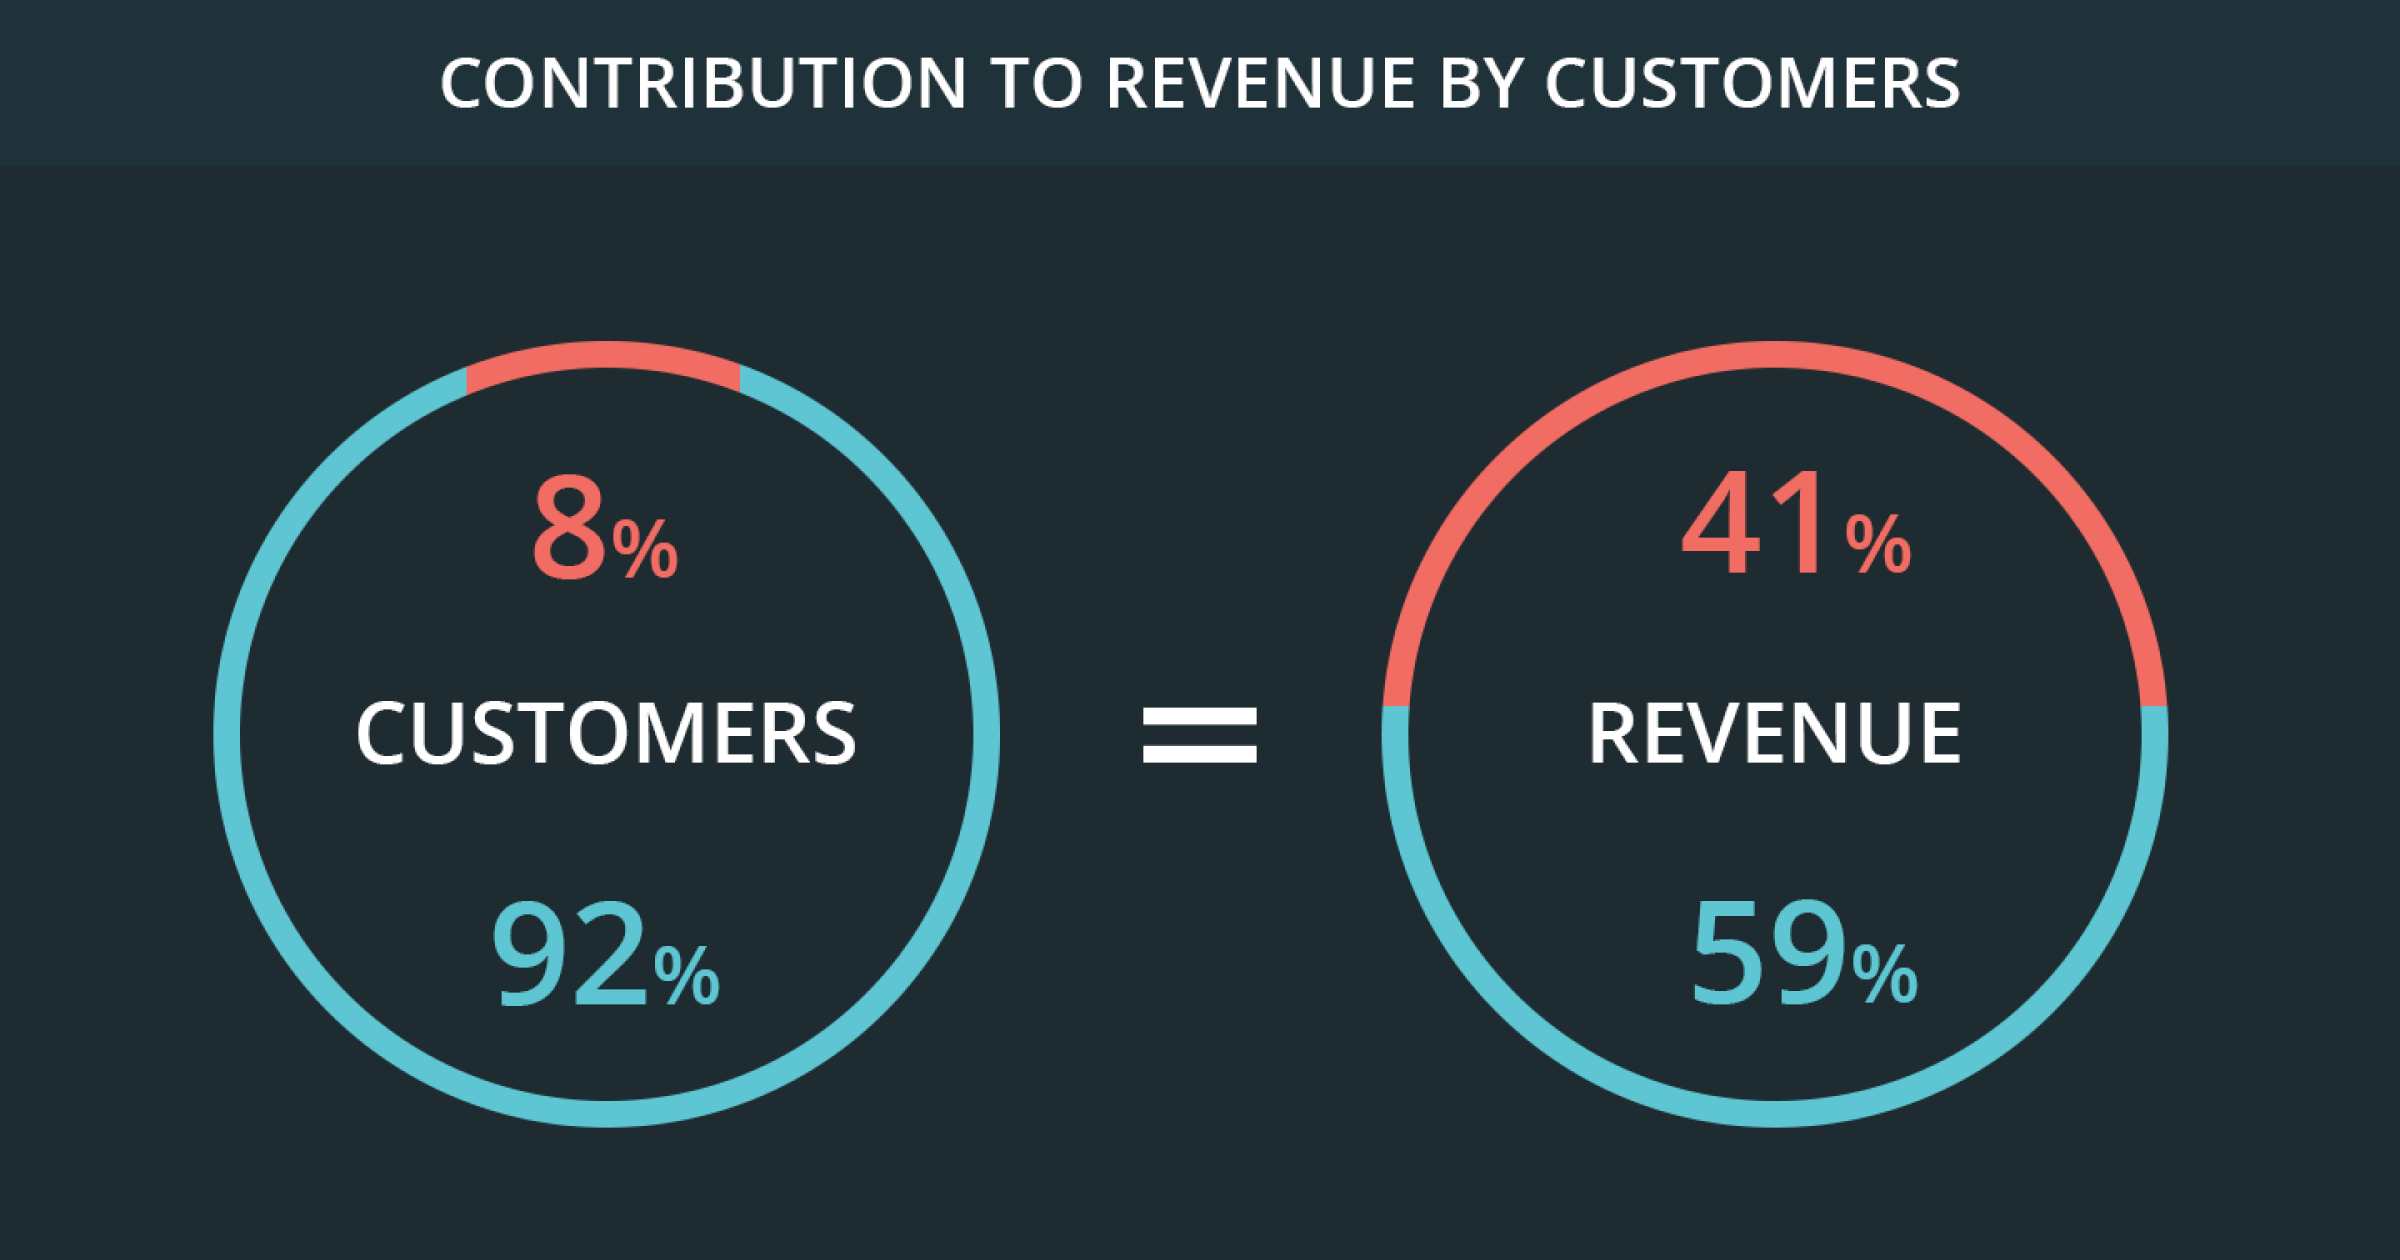 Customer retention revenue contribution